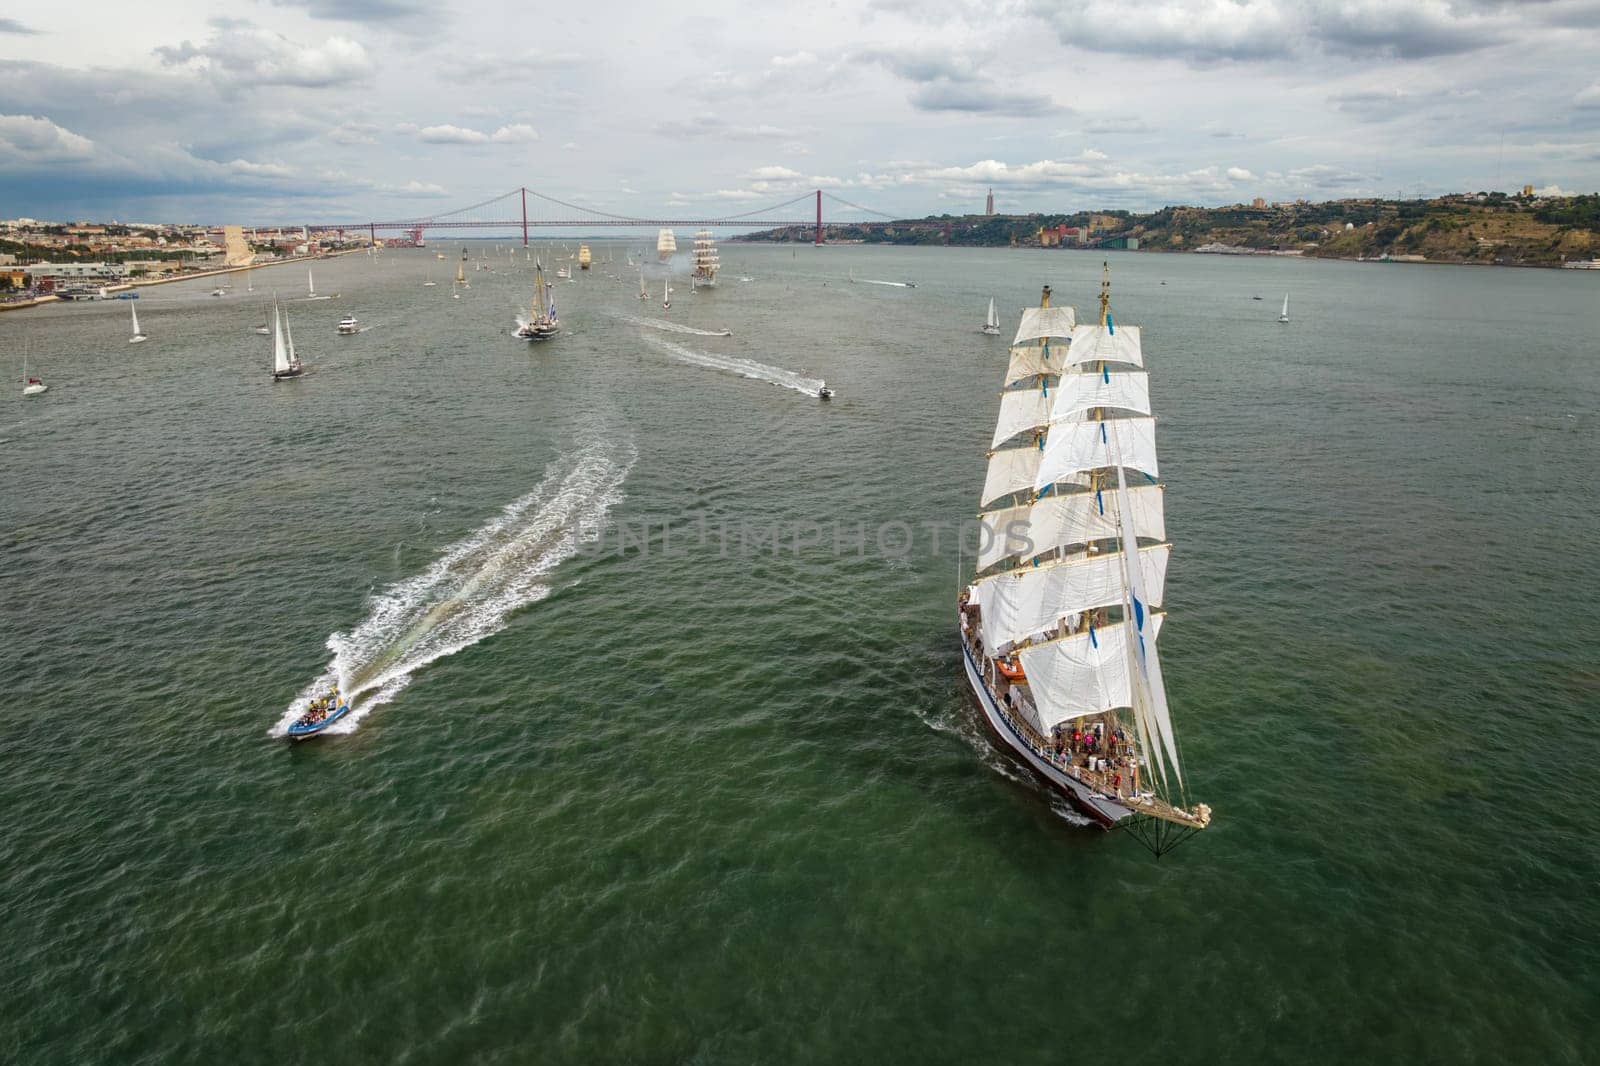 Tall ships sailing in Tagus river. Lisbon, Portugal by dimol